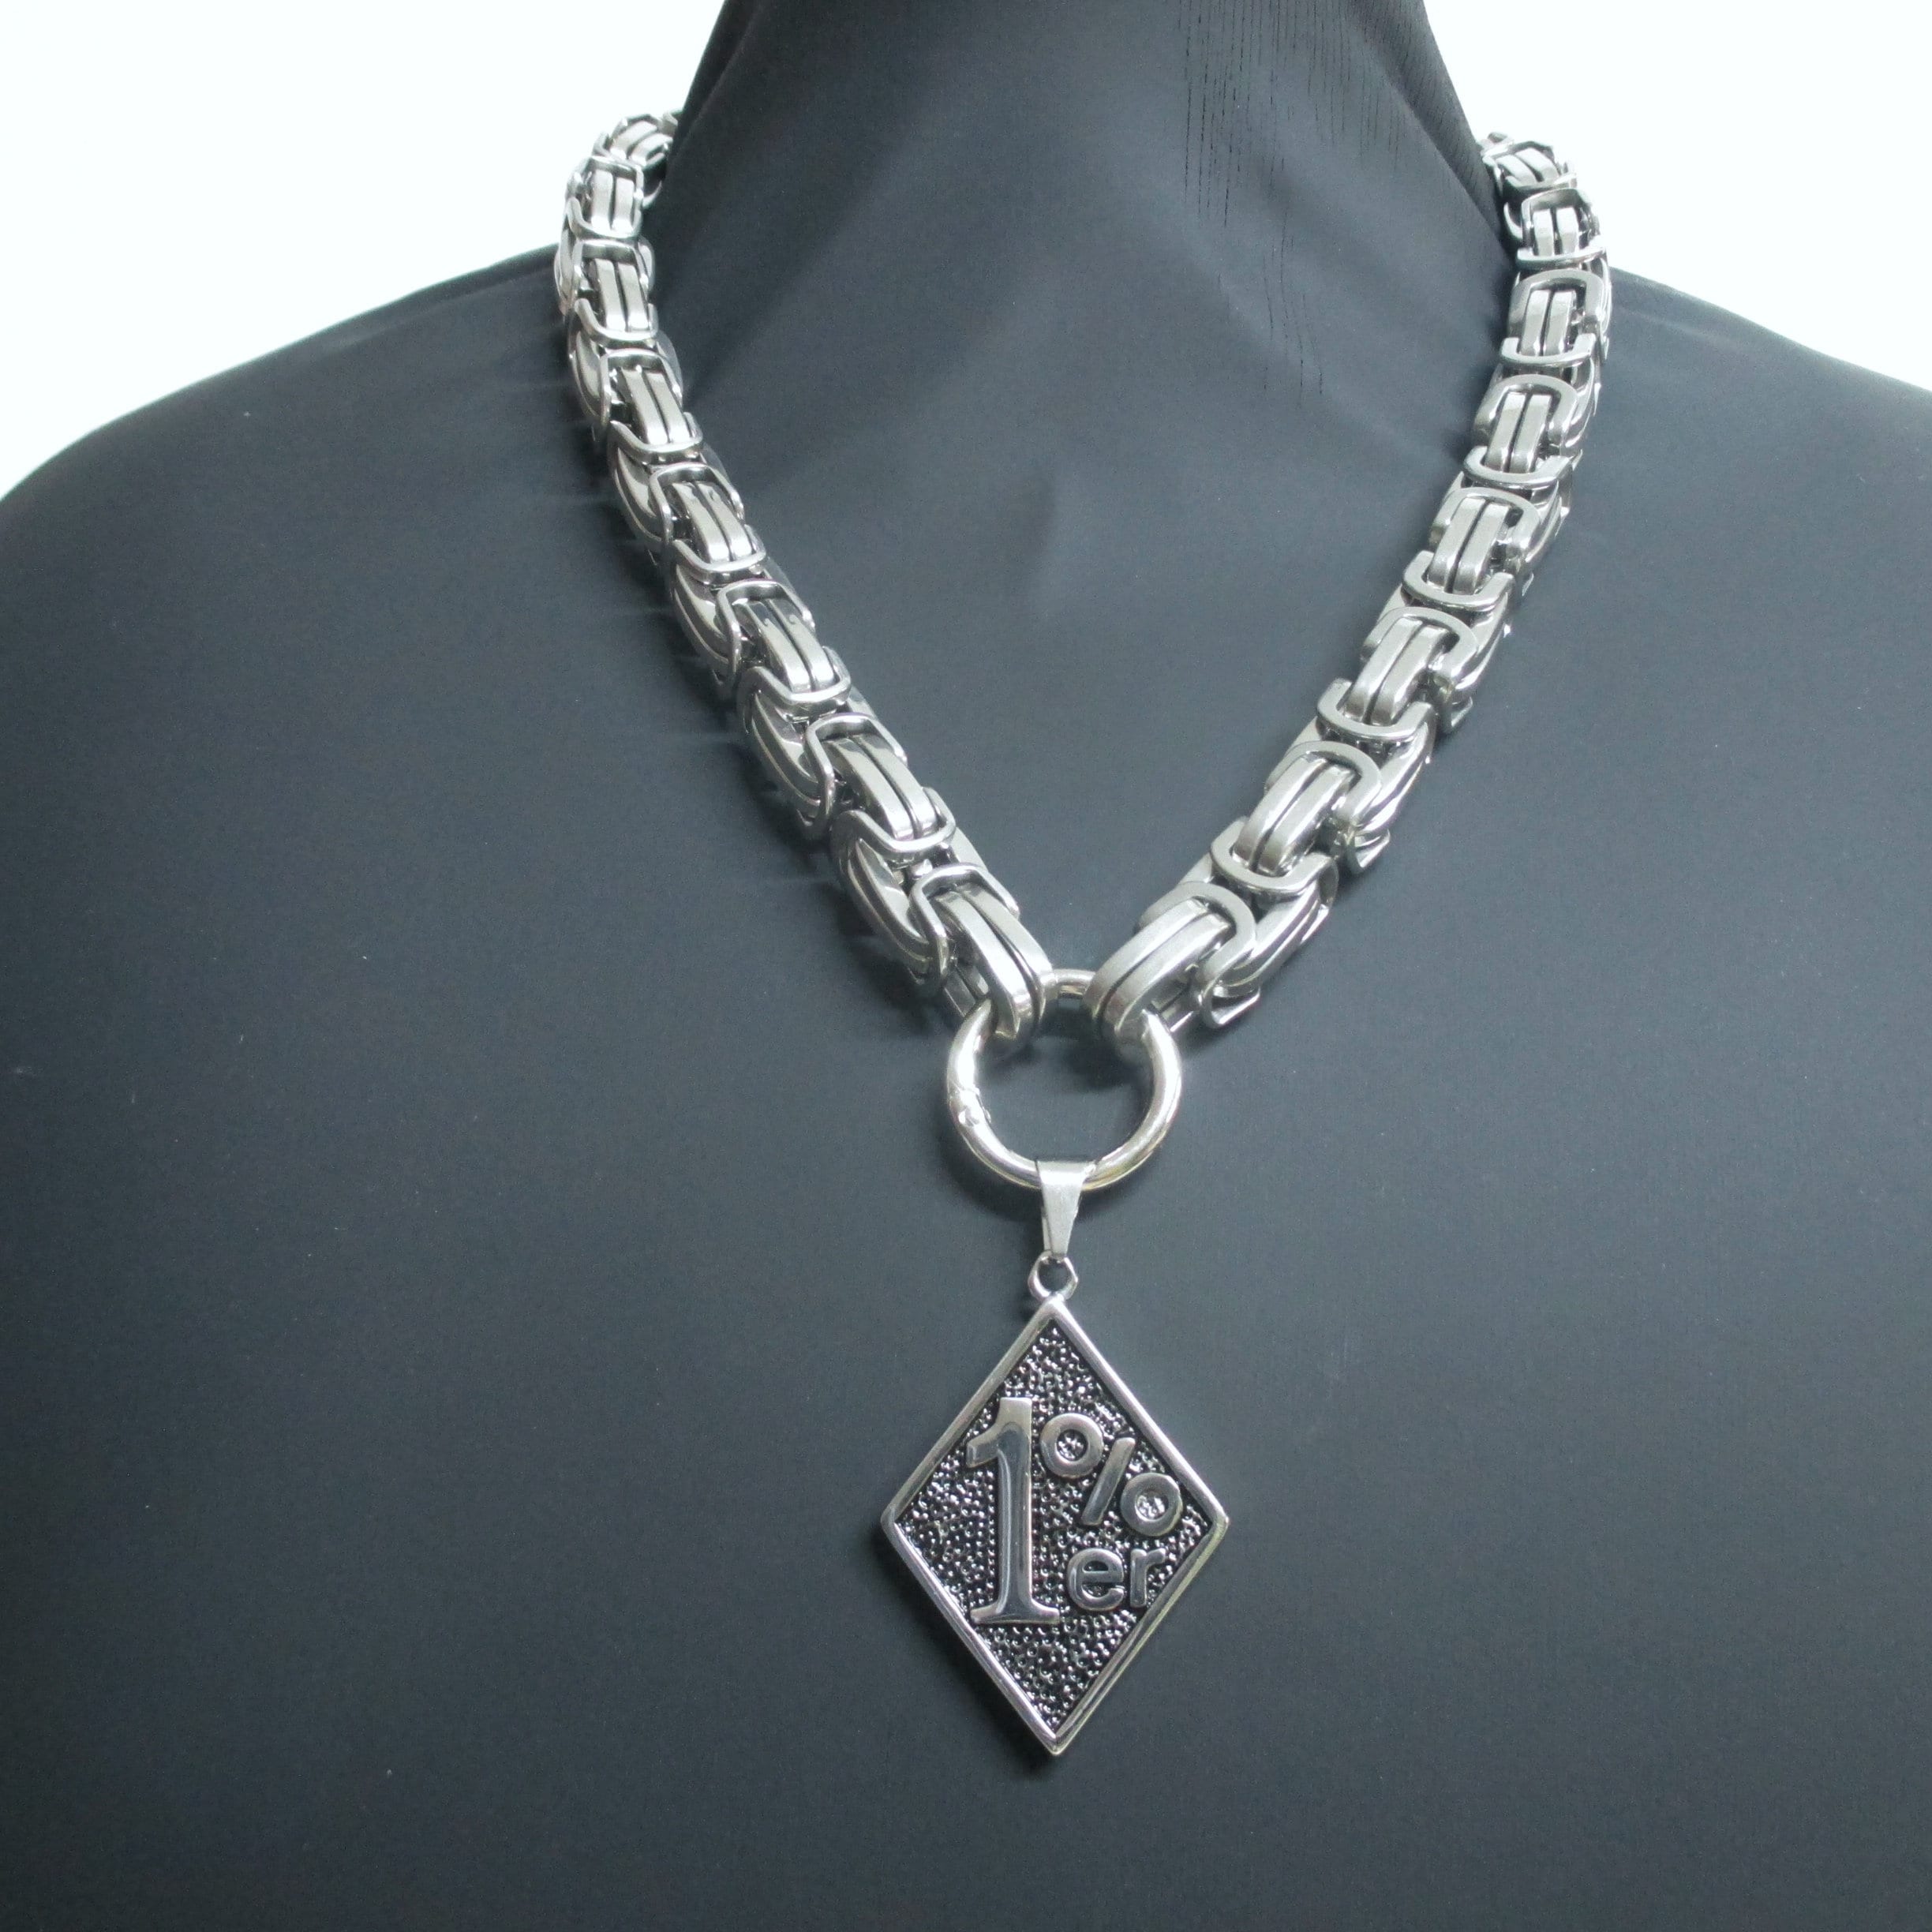 Silberkette Halskette Totenkopf Kette Gliederkette Skull necklace Silber 925